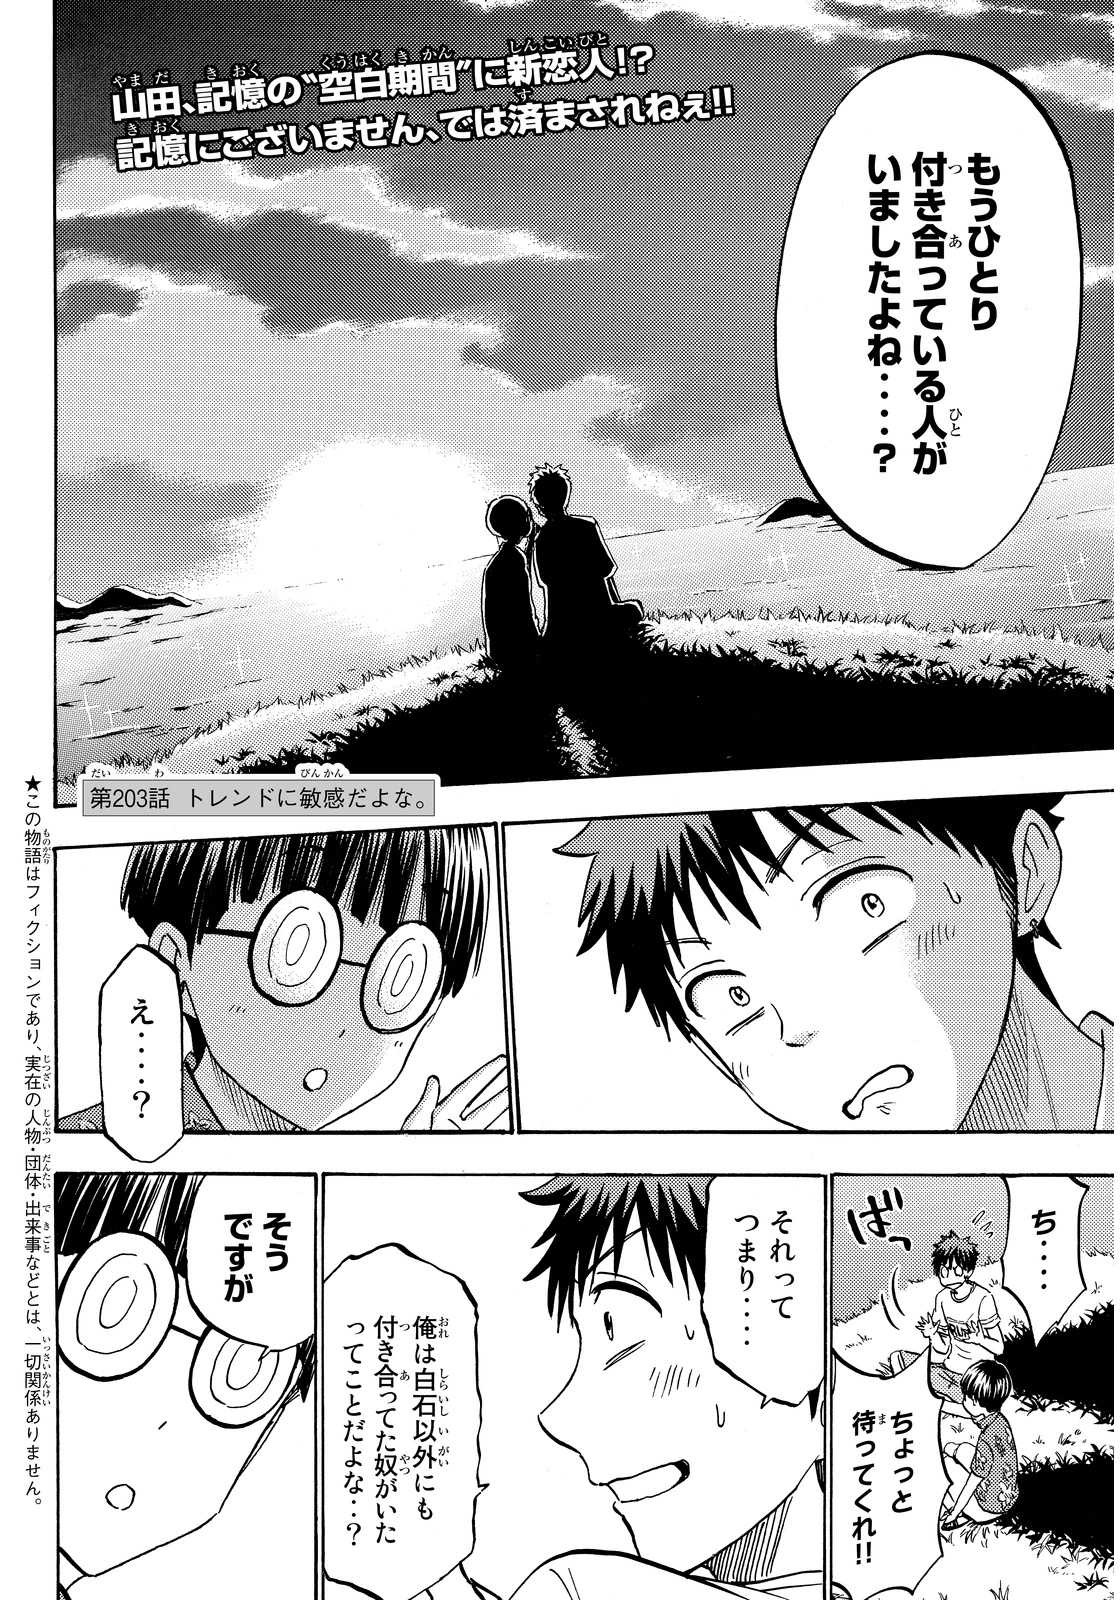 Yamada-kun to 7-nin no Majo - Chapter 203 - Page 2